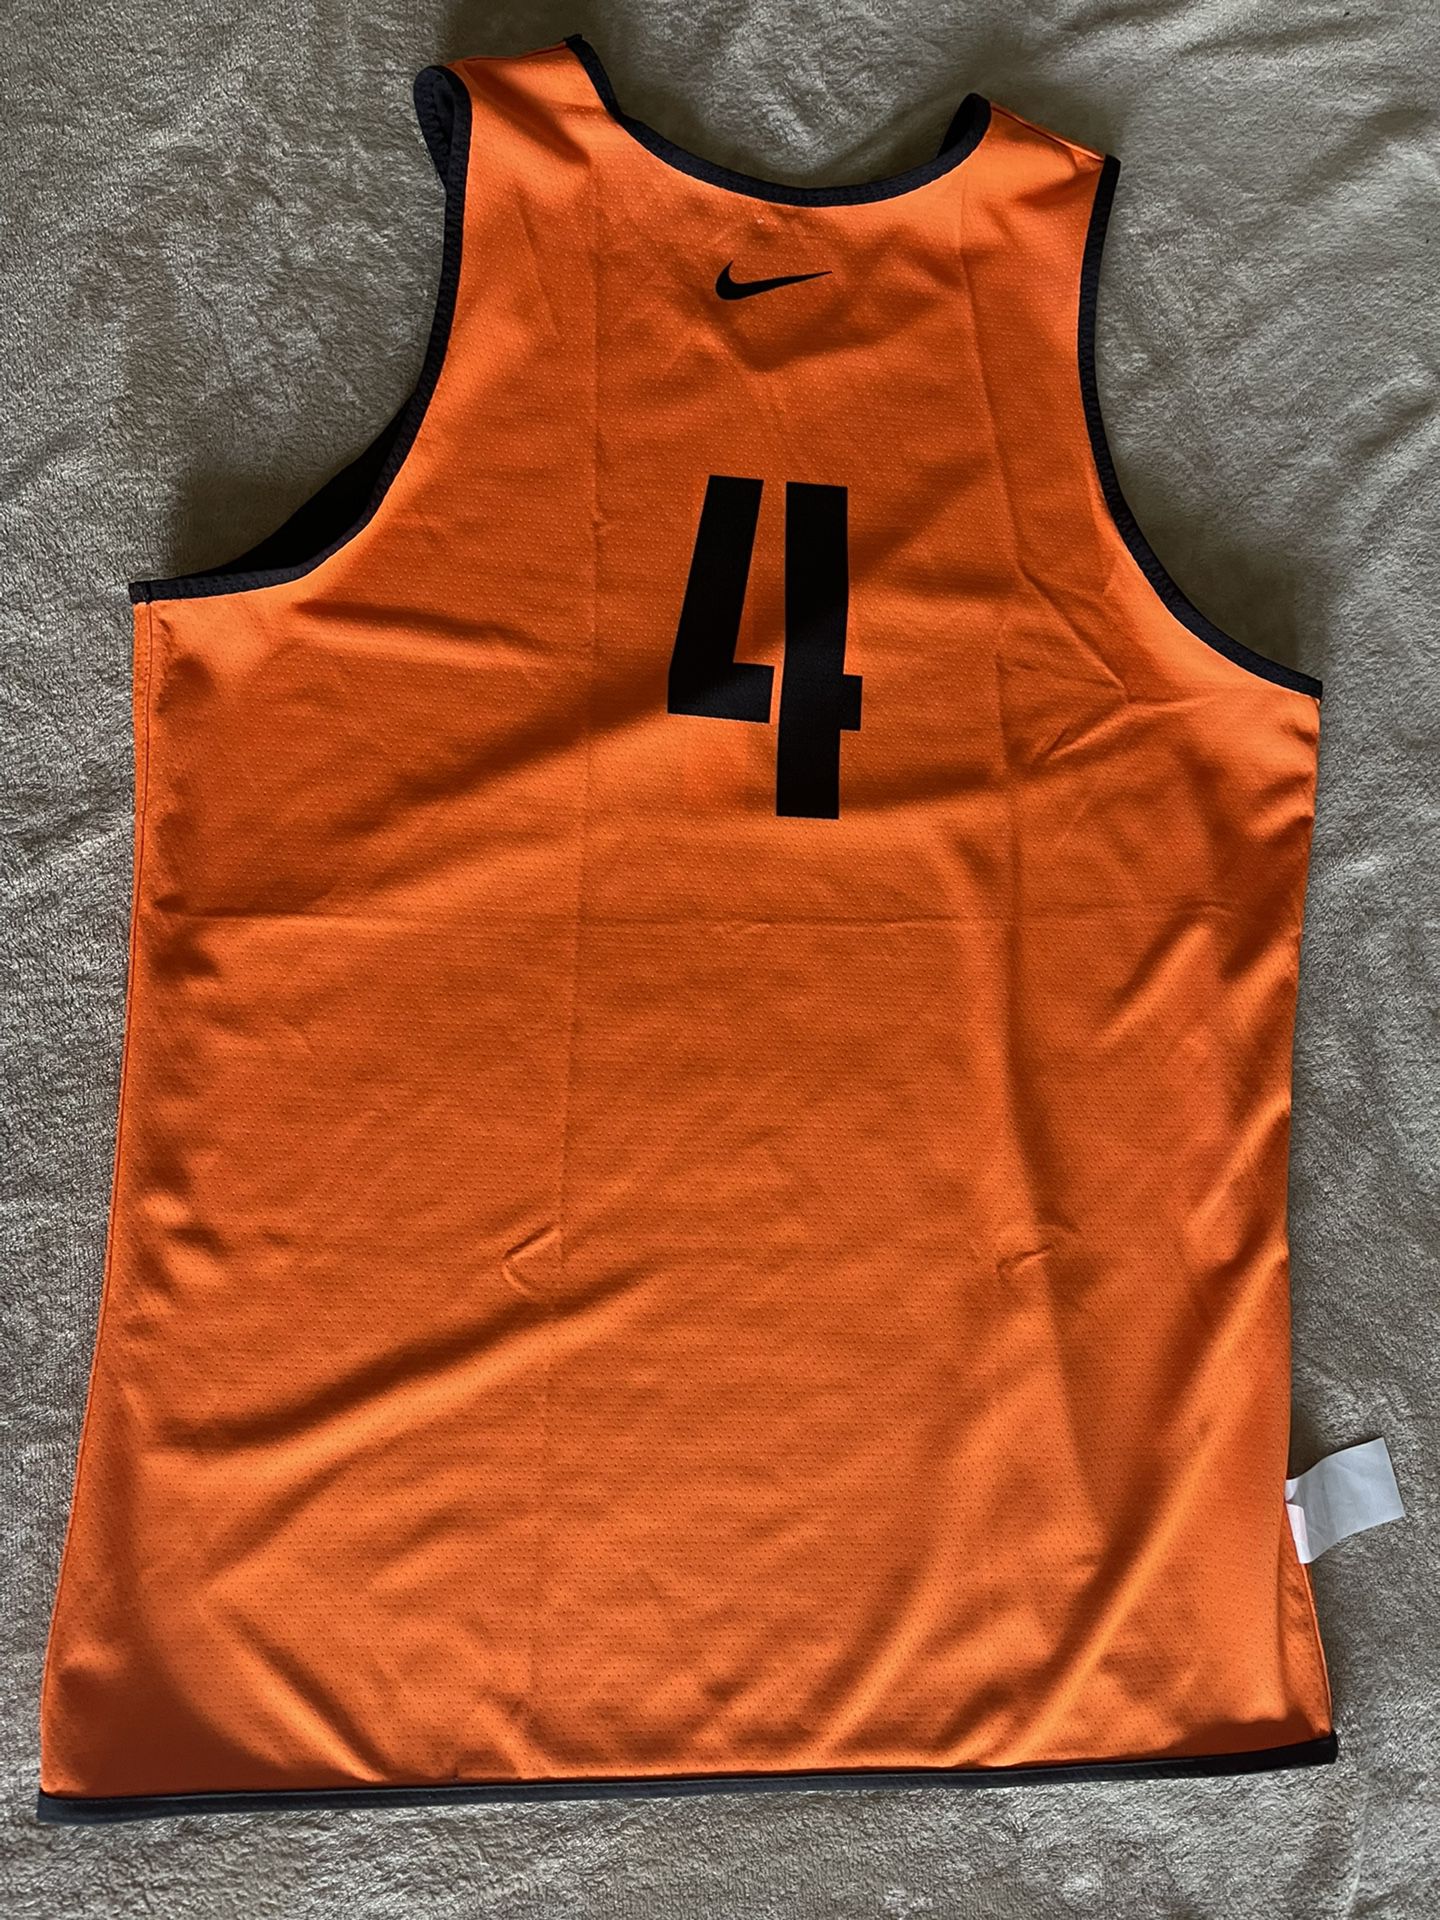 Nike FIBA 3x3 Reversible Jersey #7 Black Orange Men’s 3XL New Without Tags